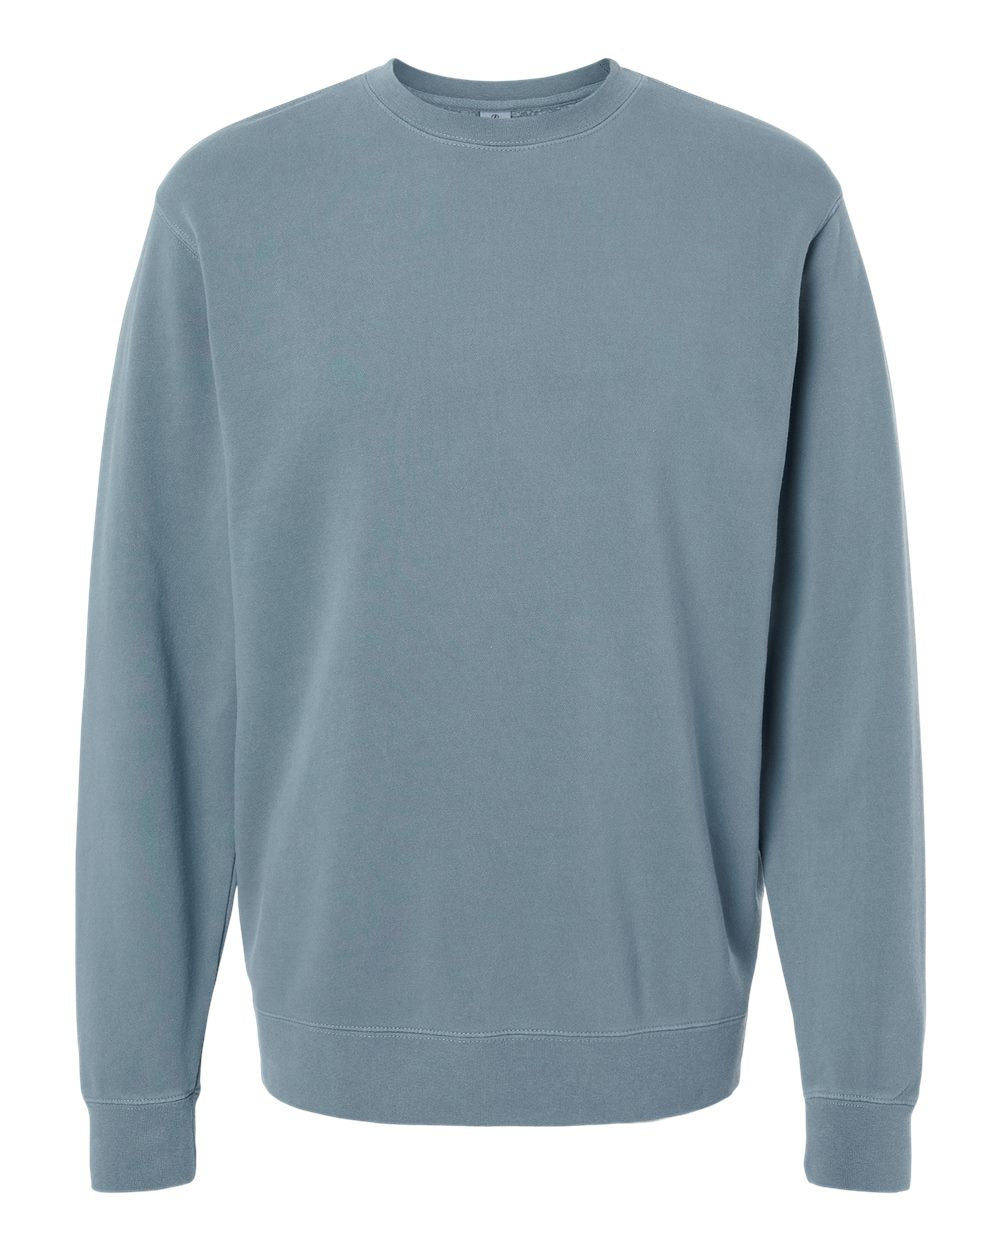 Independent Pigment-Dyed Crewneck Sweatshirt (PRM3500) in Pigment Slate Blue